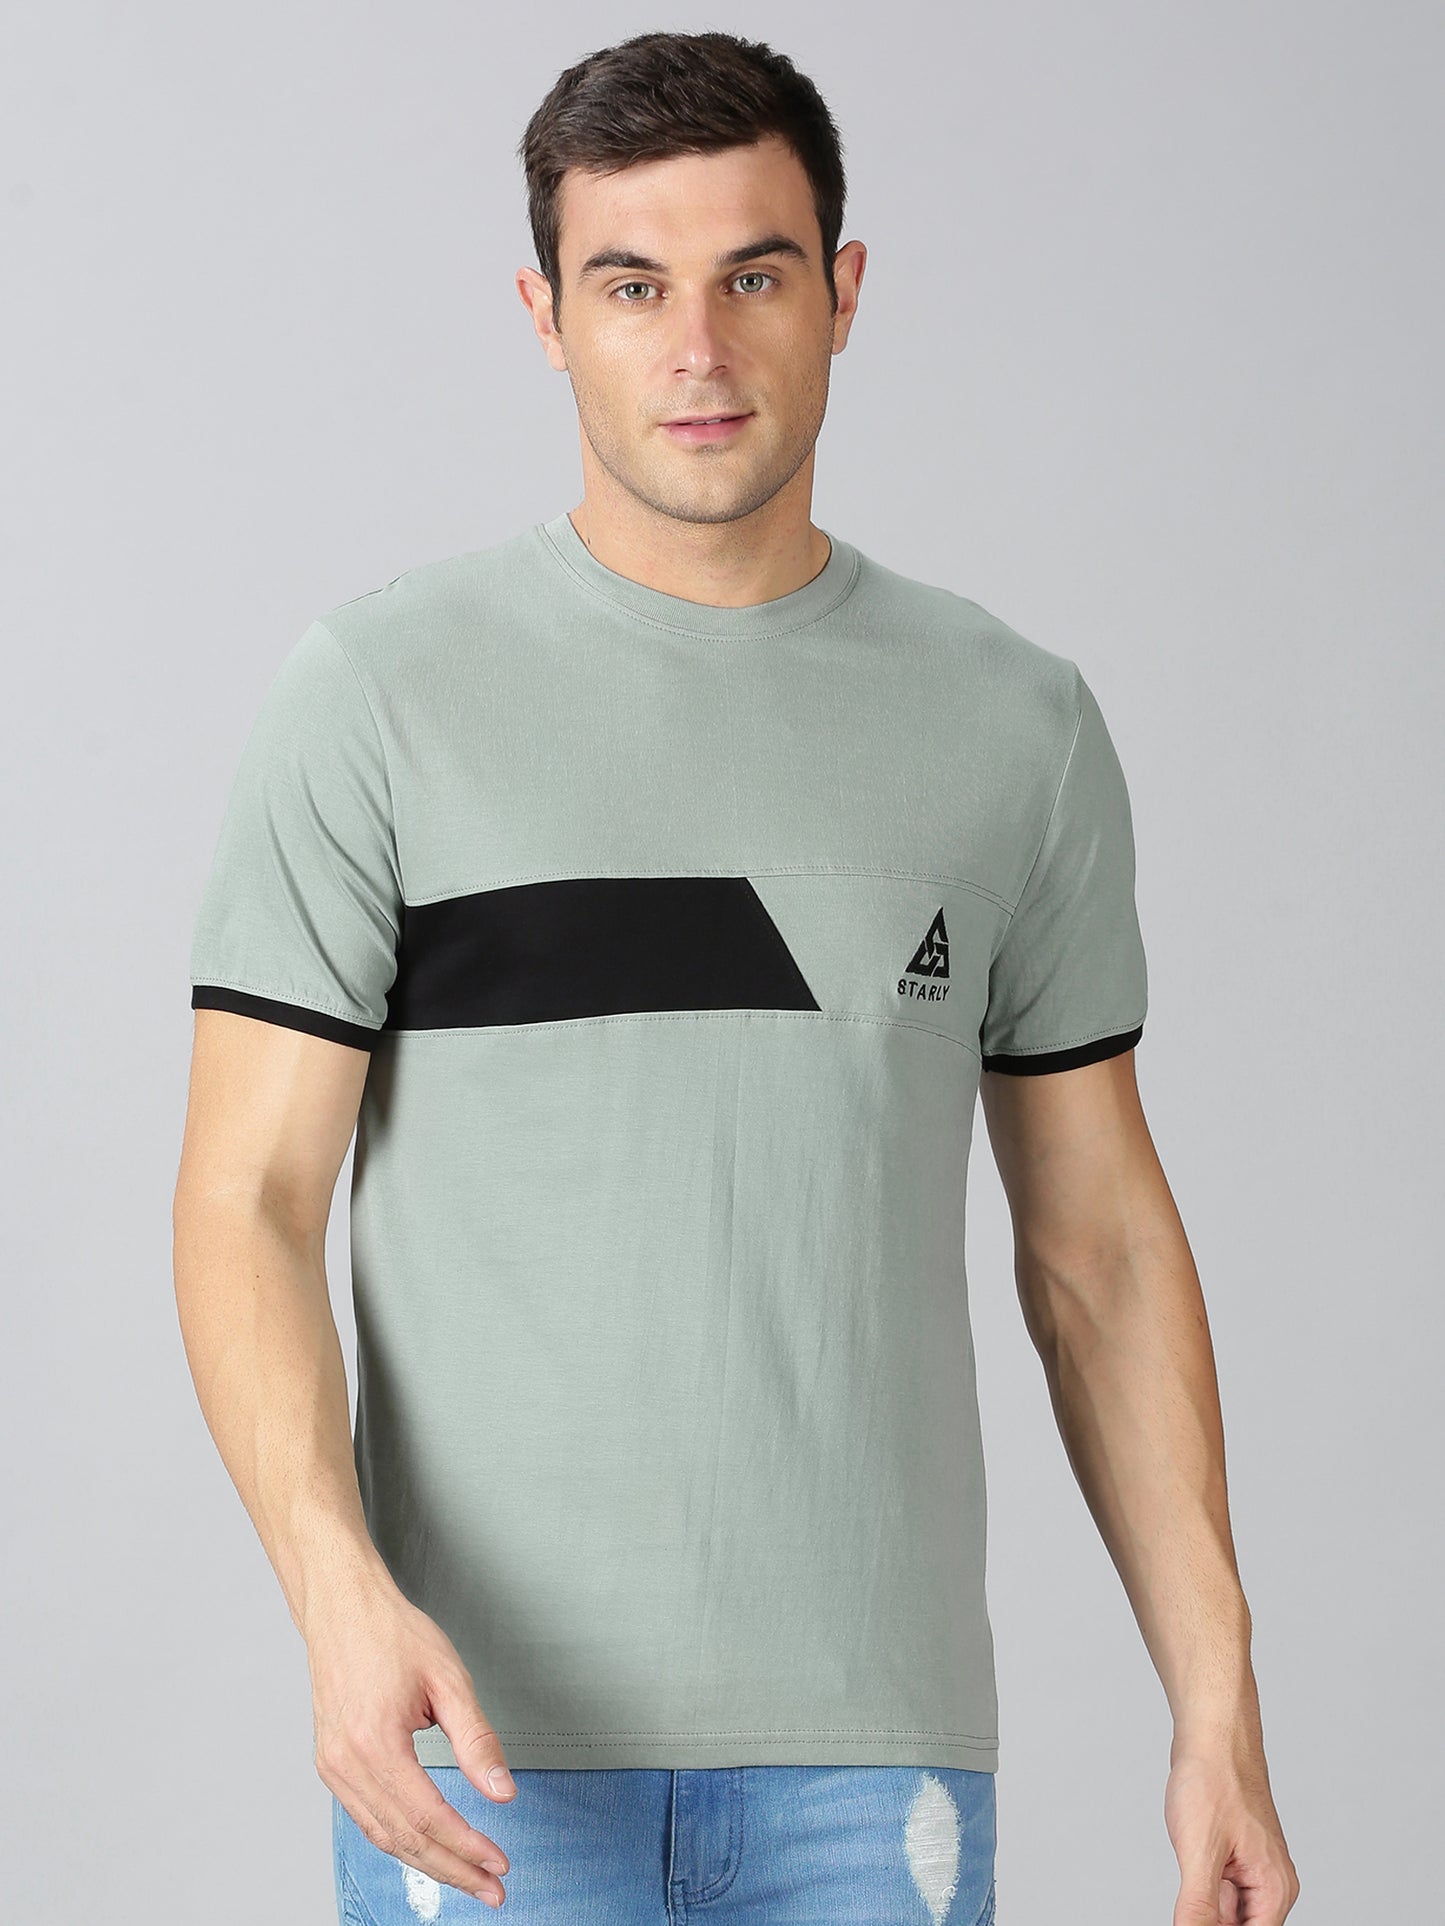 ColourBlocked T-Shirt: C-Green